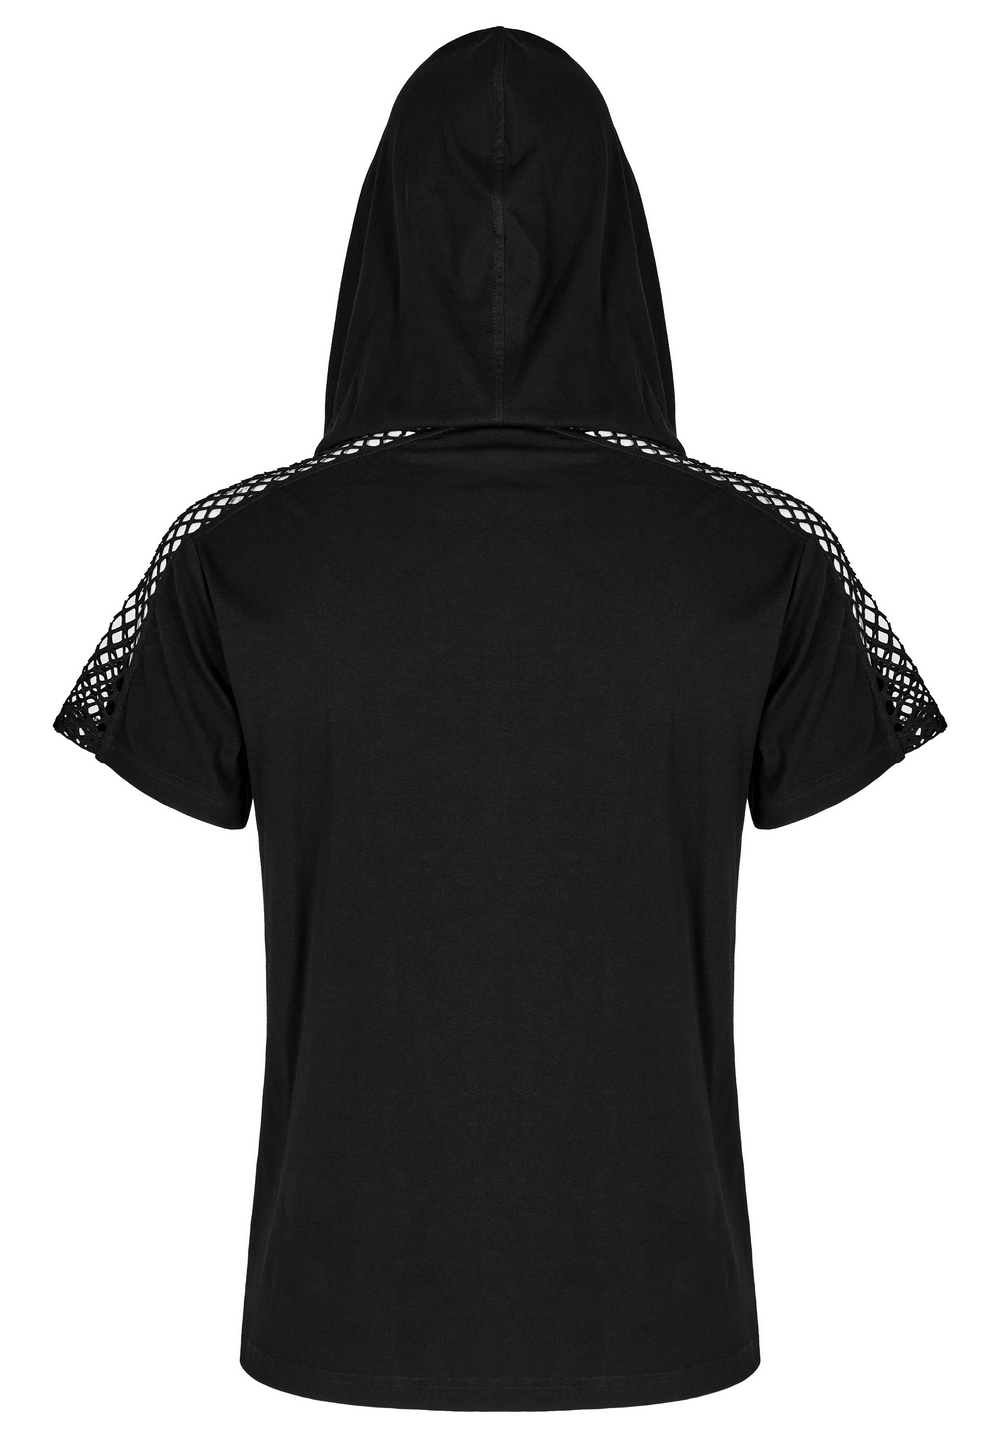 Punk Stylish Men's Black Mesh Hoodie T-Shirt